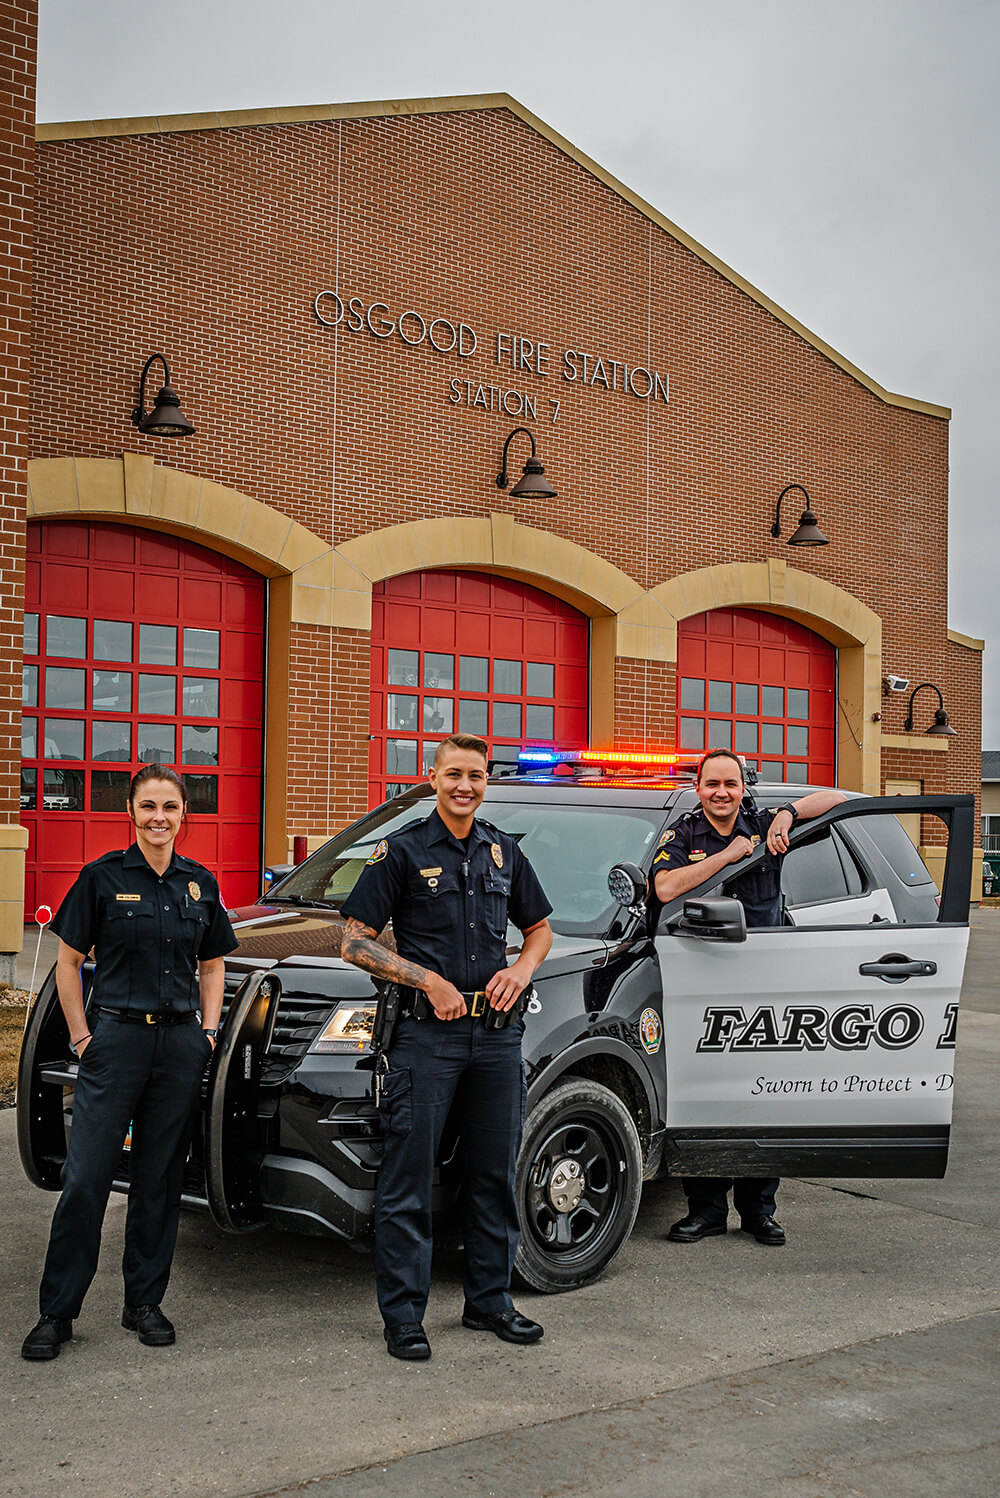 City of Fargo Fire Department